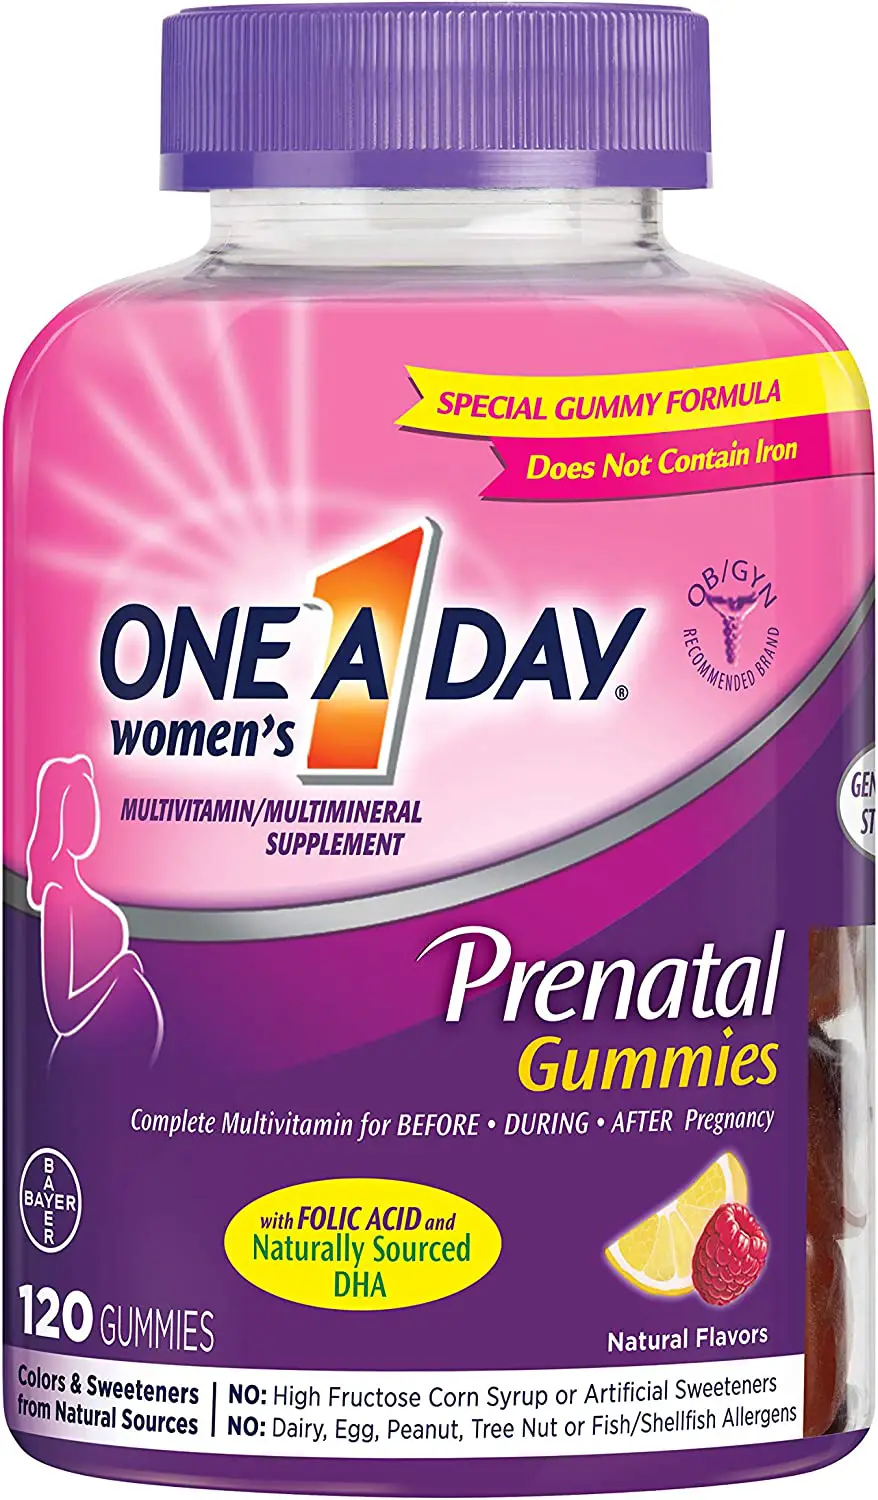 One A Day Womenâs Prenatal Multivitamin Gummies ...